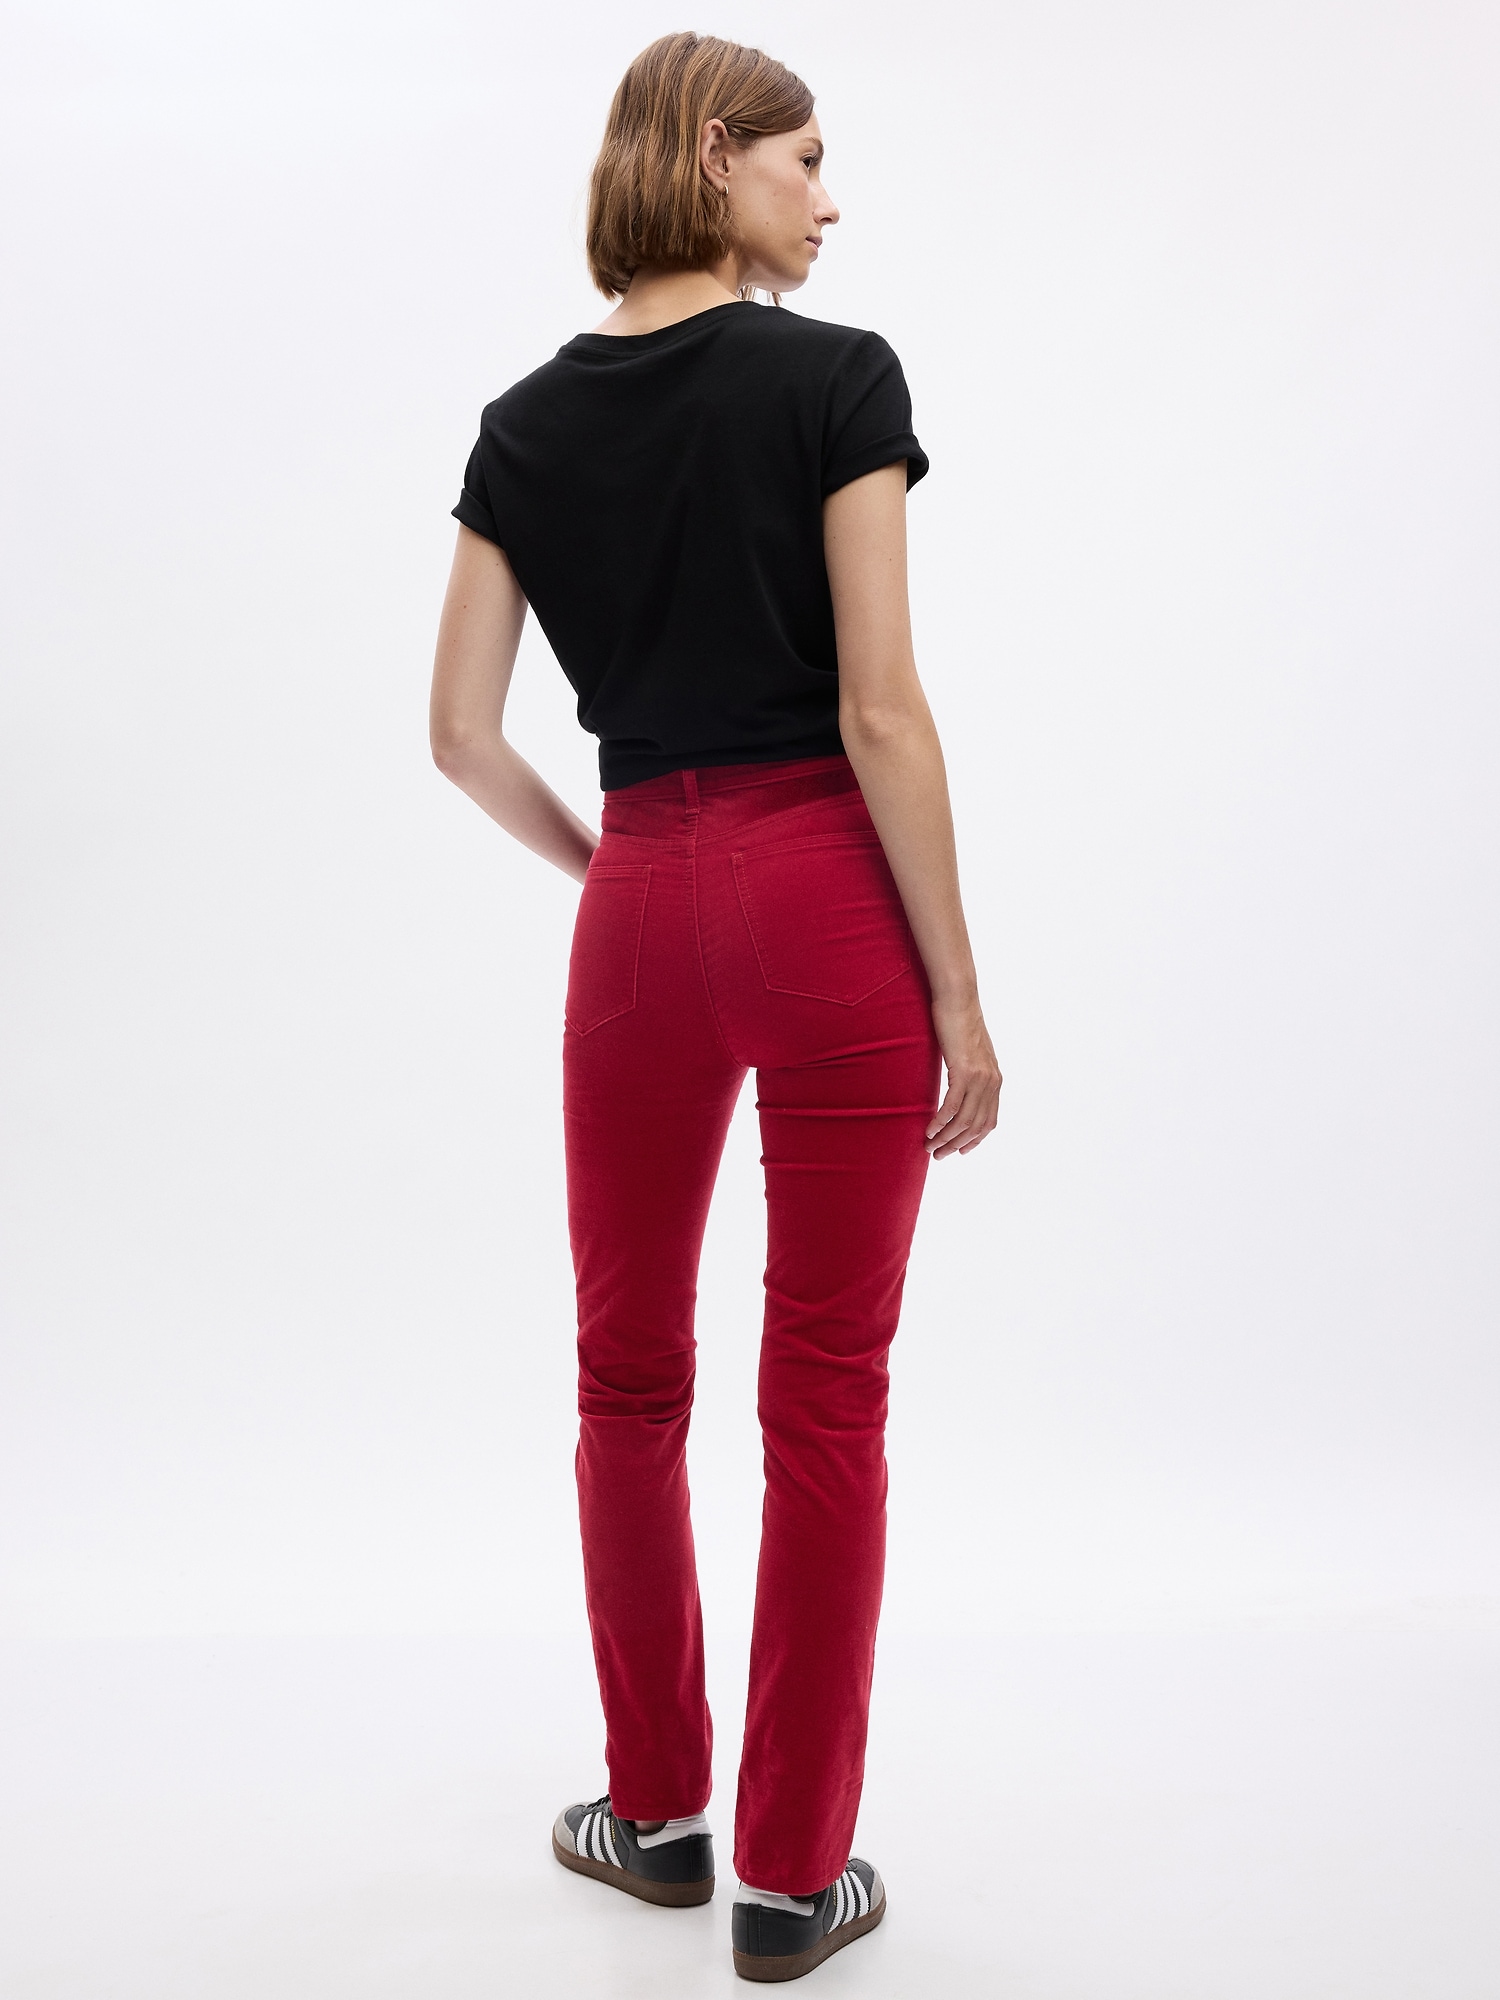 Red Corduroy Pants, Casual Pants, Long Pants, Vintage Winter